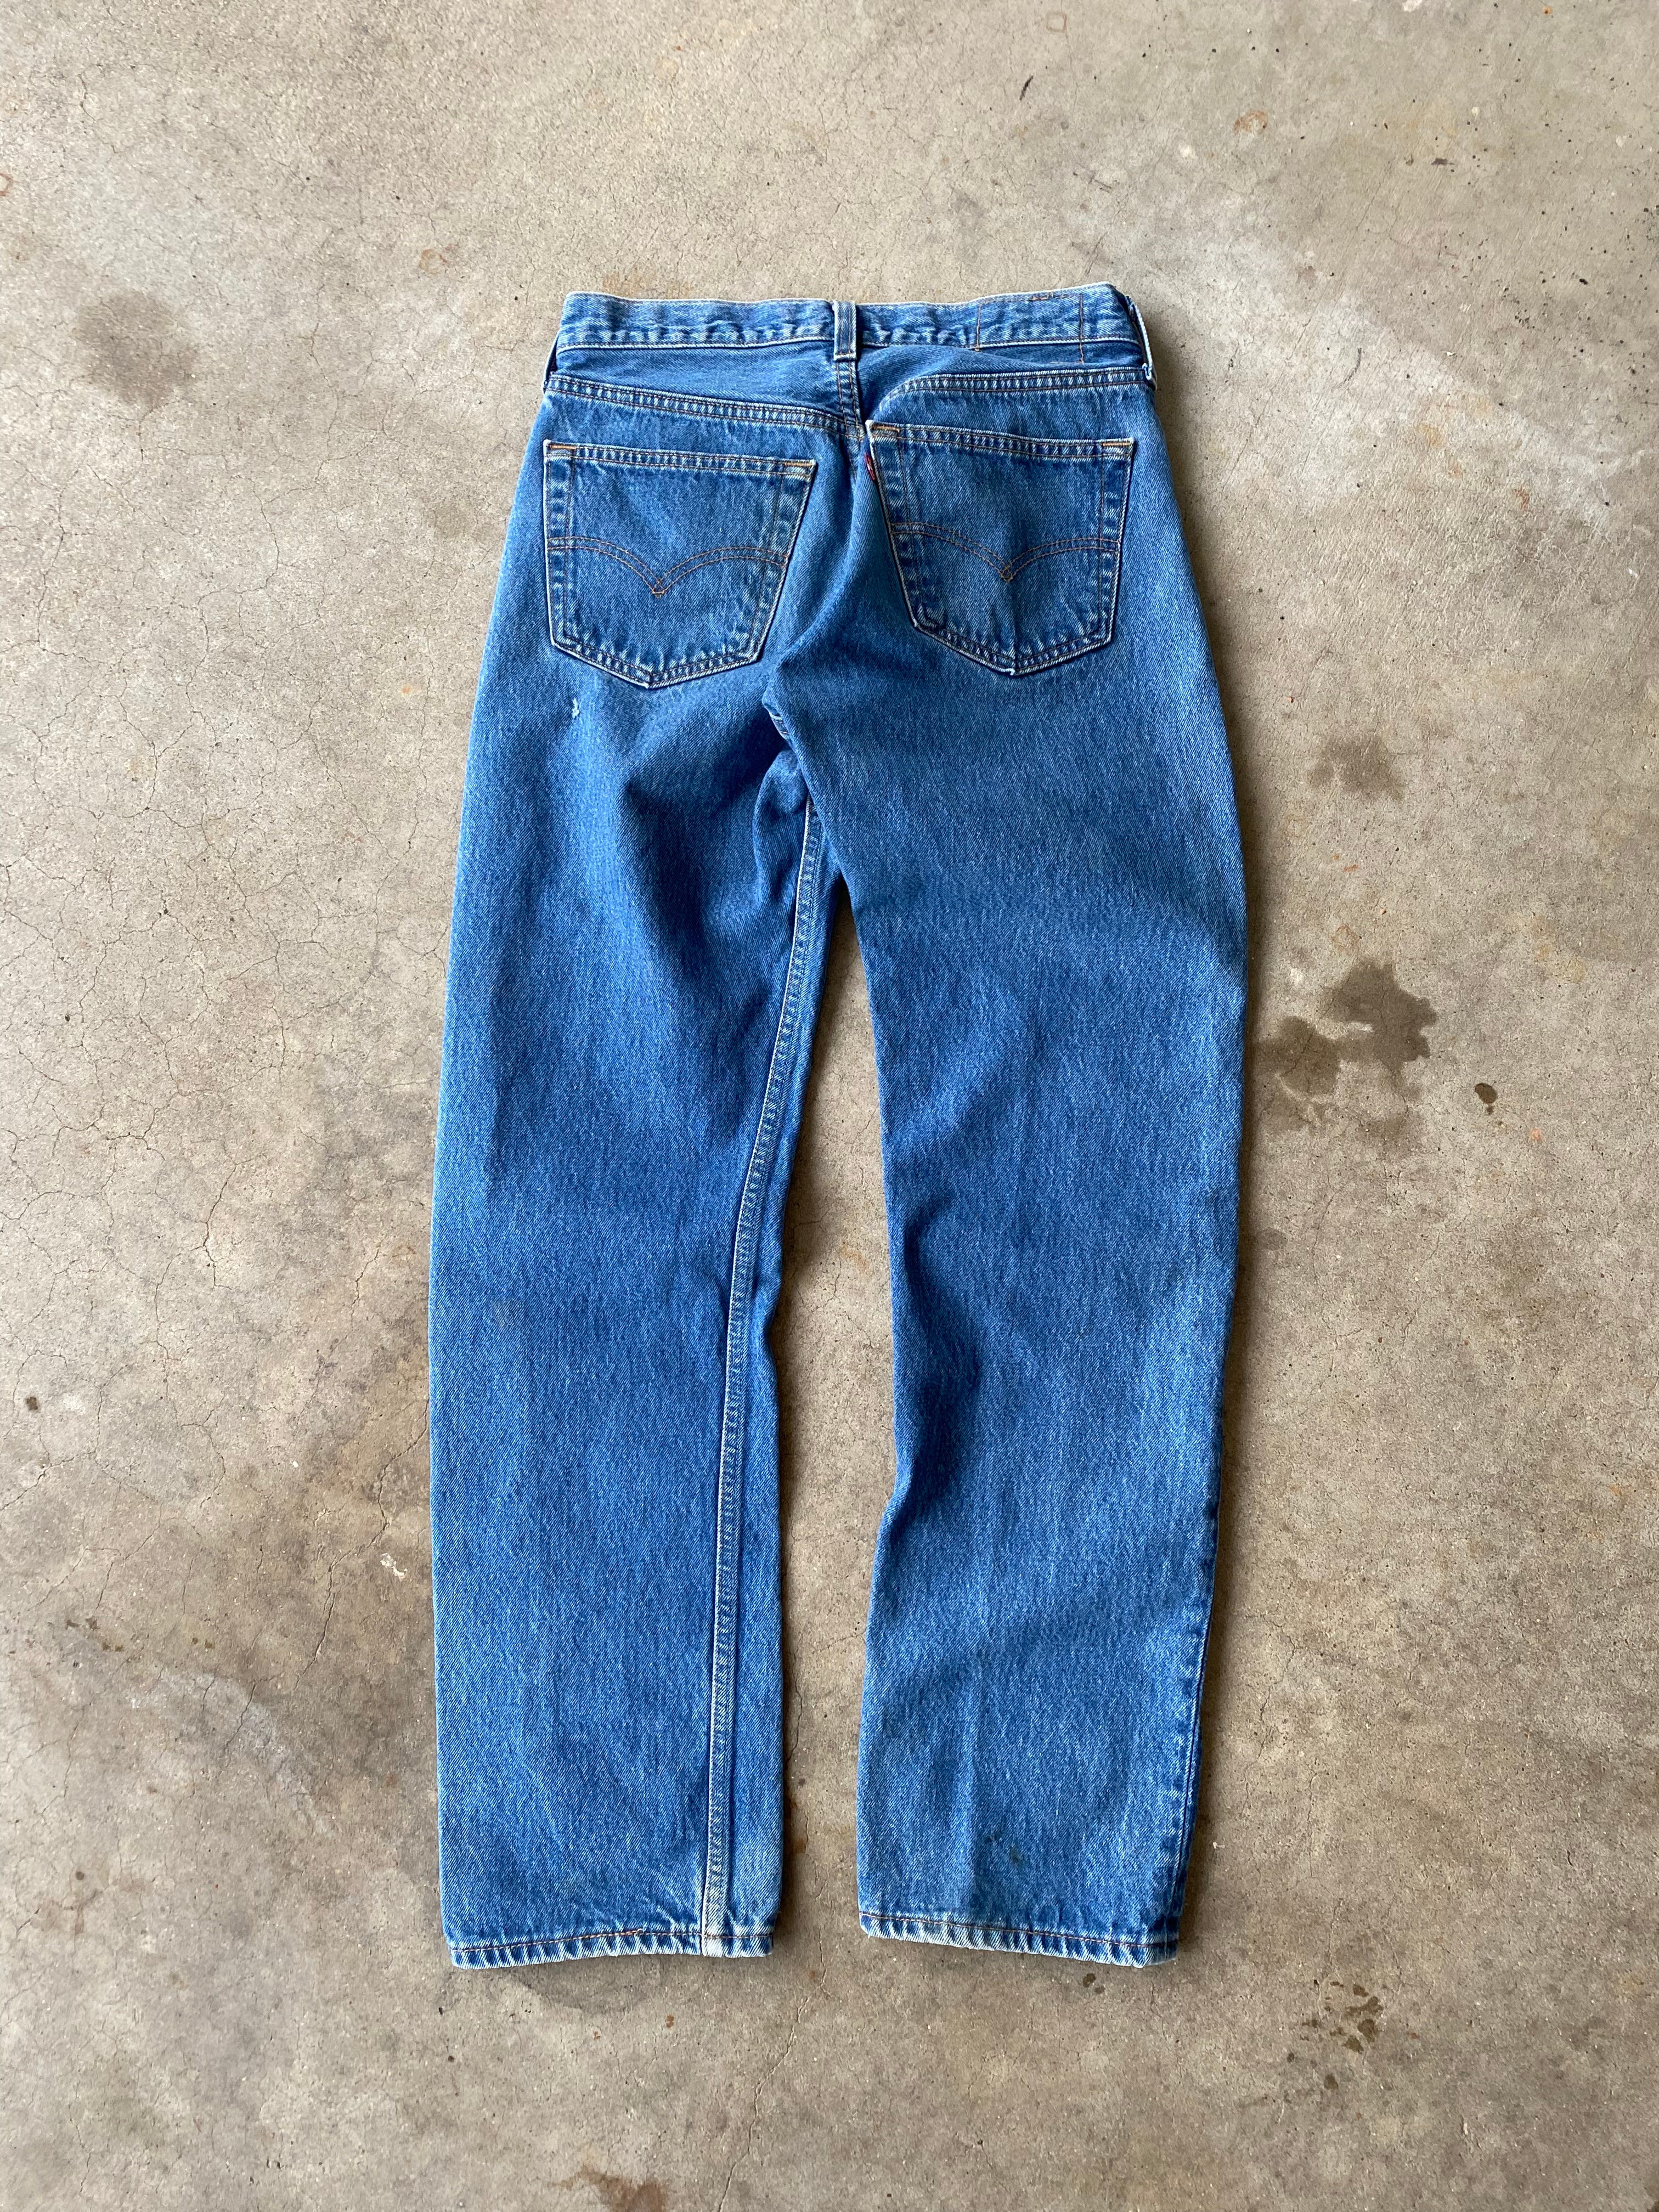 1990s Levi’s 501 Jeans (29"x30")